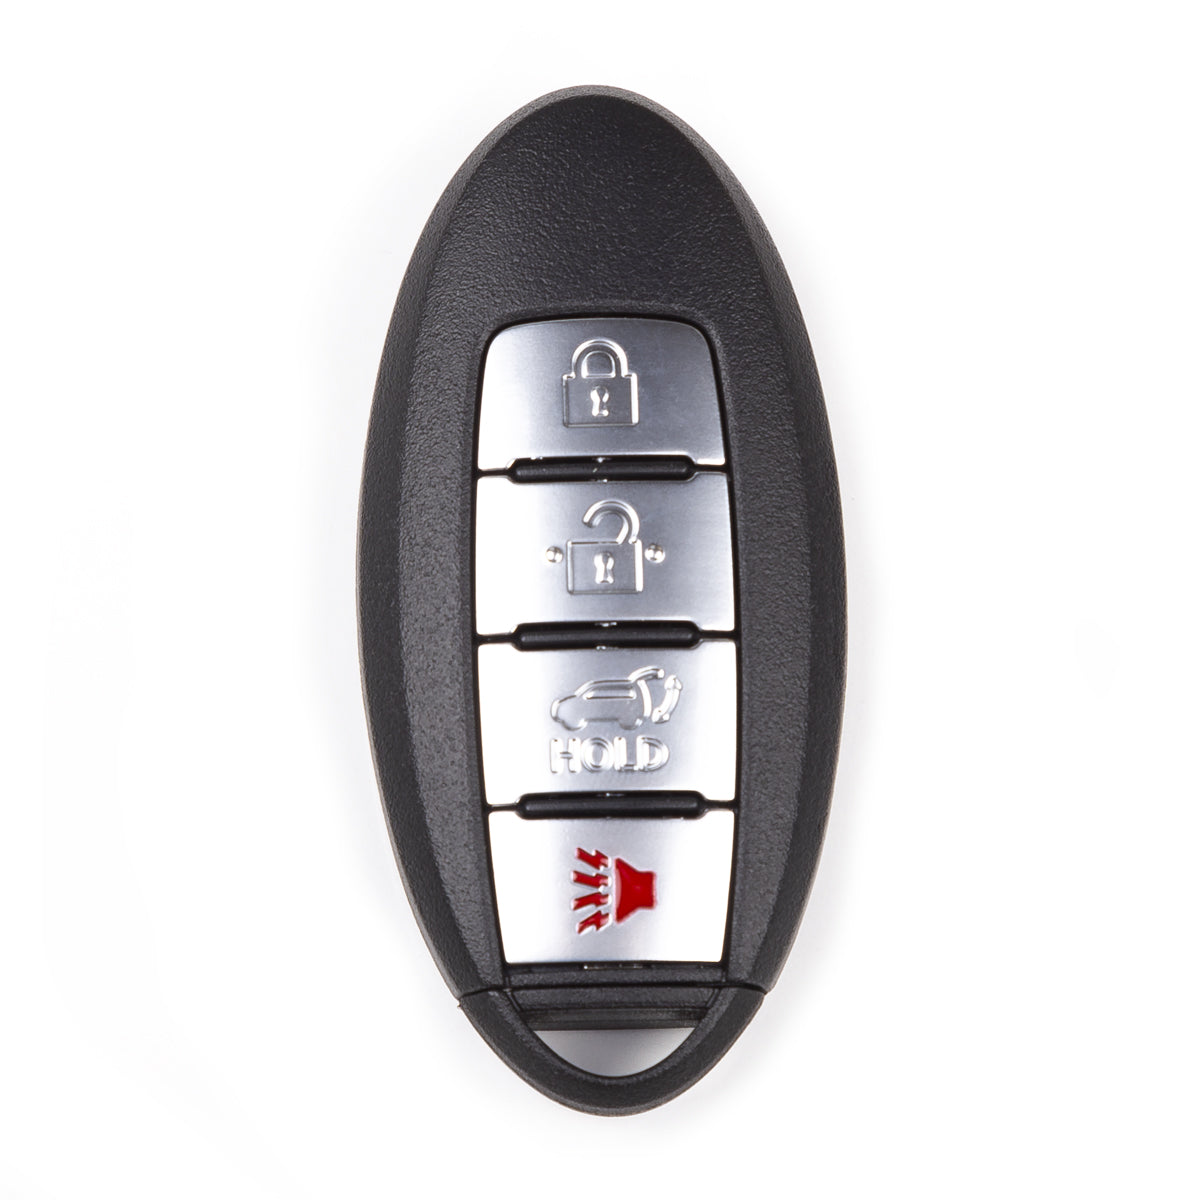 2015 Nissan Rogue Smart Key 4 Buttons Fob FCC# KR5S180144106 - Aftermarket